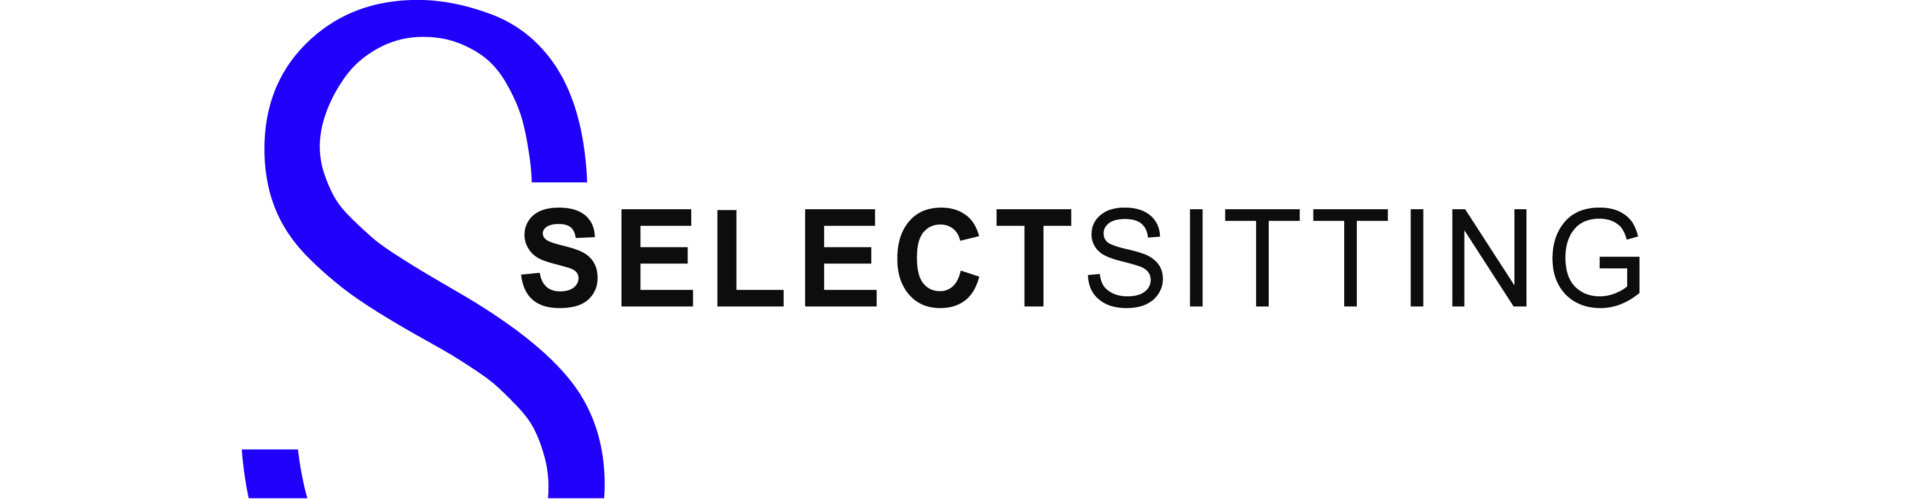 Select Sitting_Logo_DEF